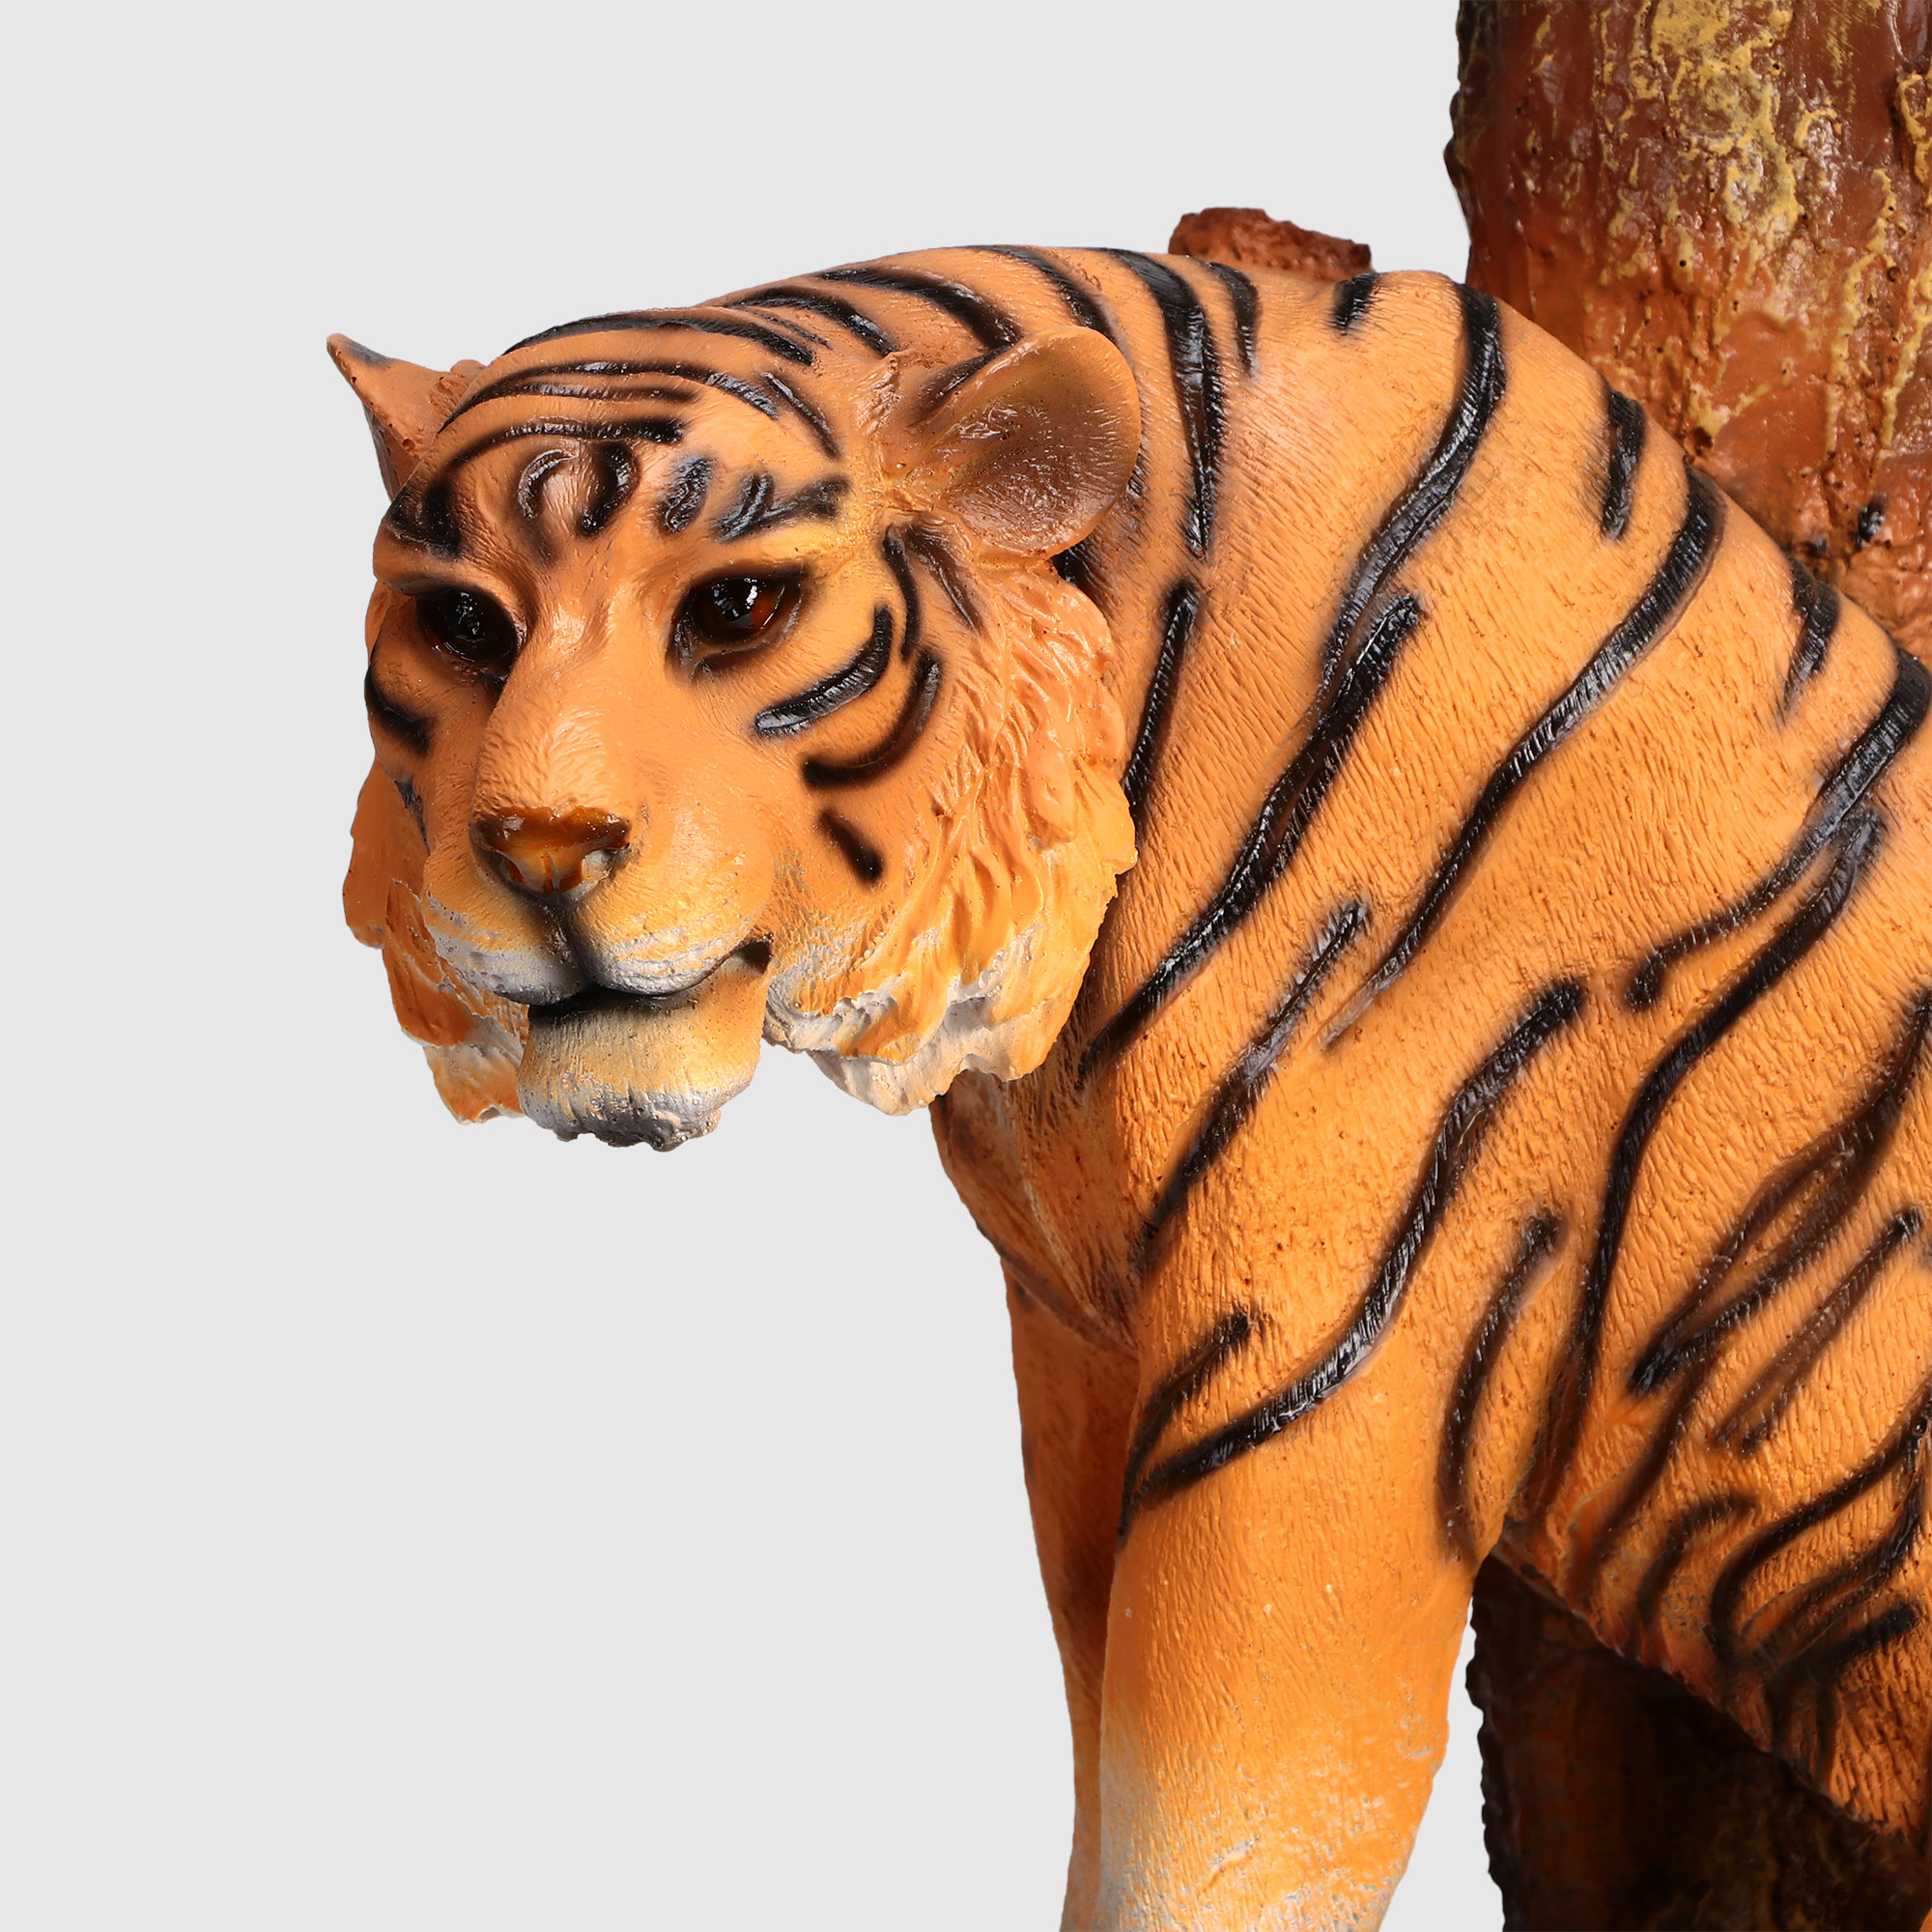 фото Фигура тпк полиформ тигр на камнях 66 см